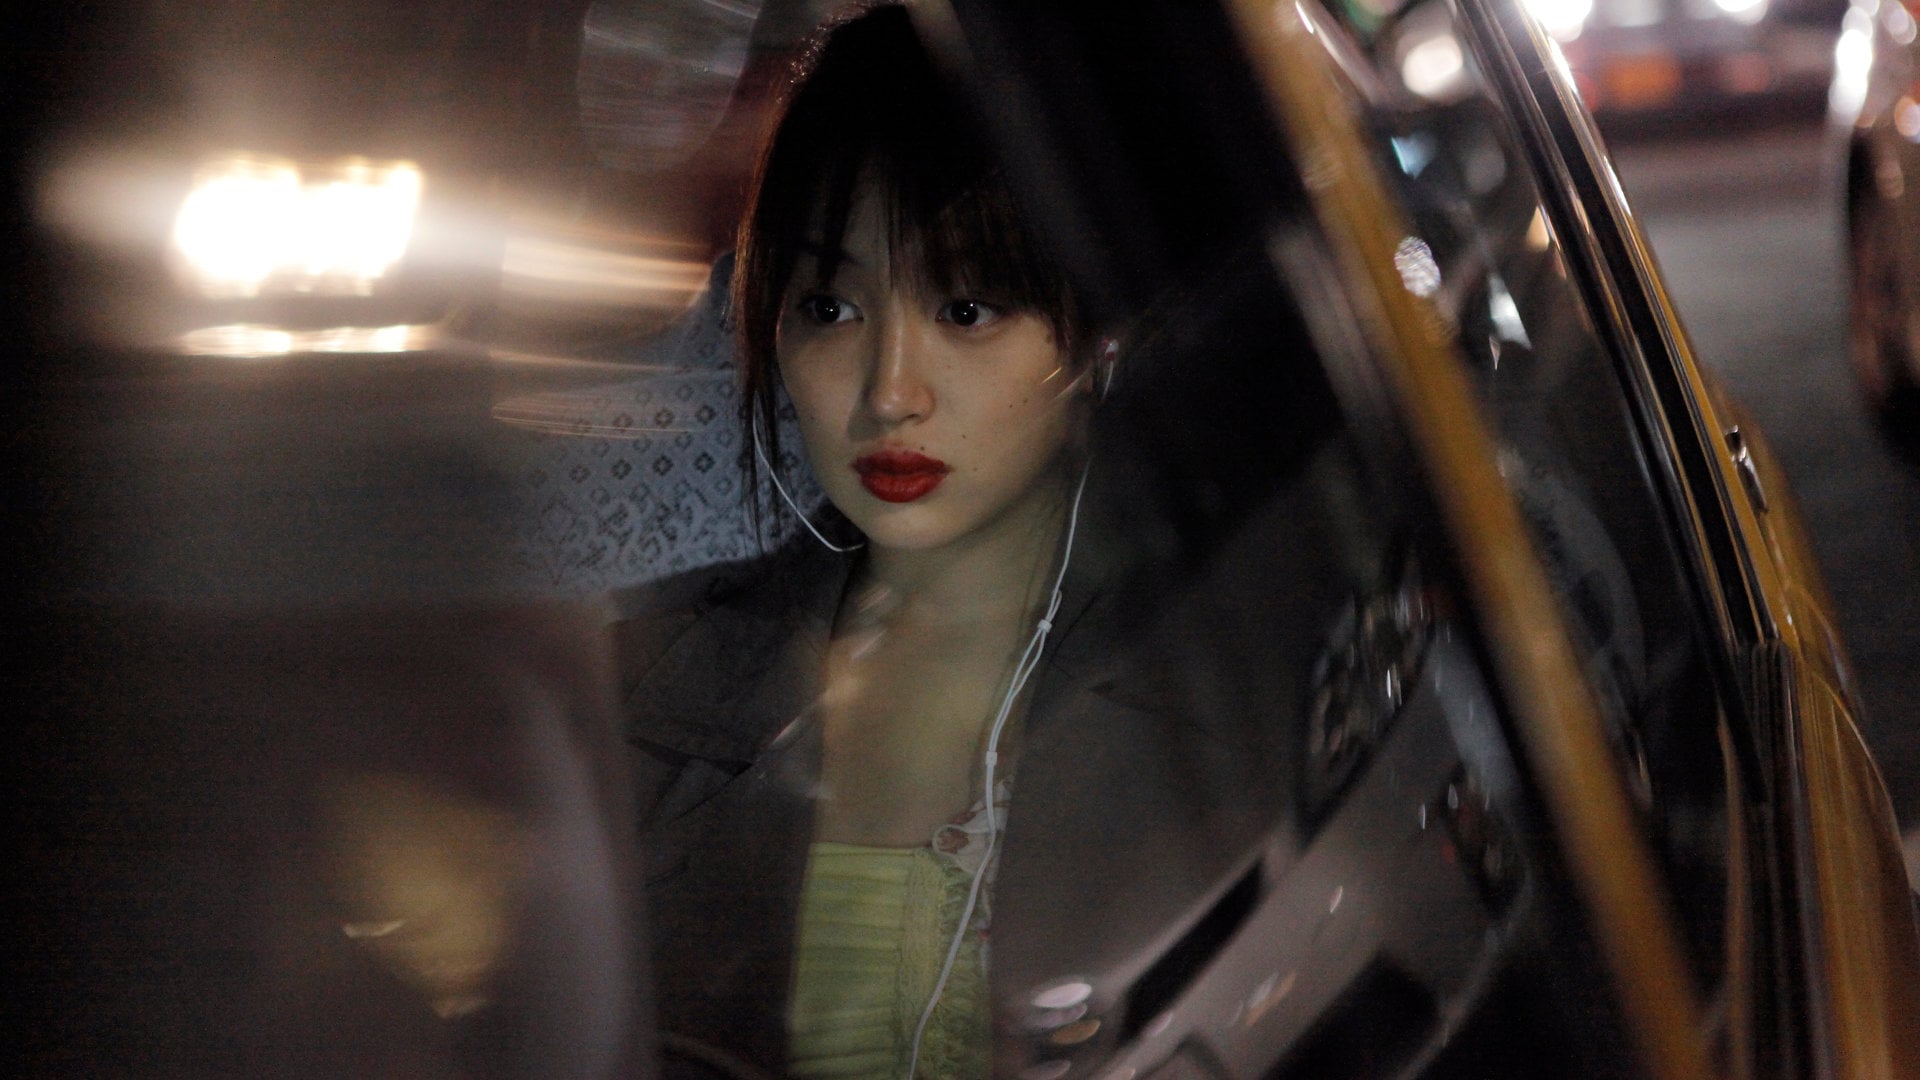 Rin Takanashi dans une voiture dans Like Someone in Love